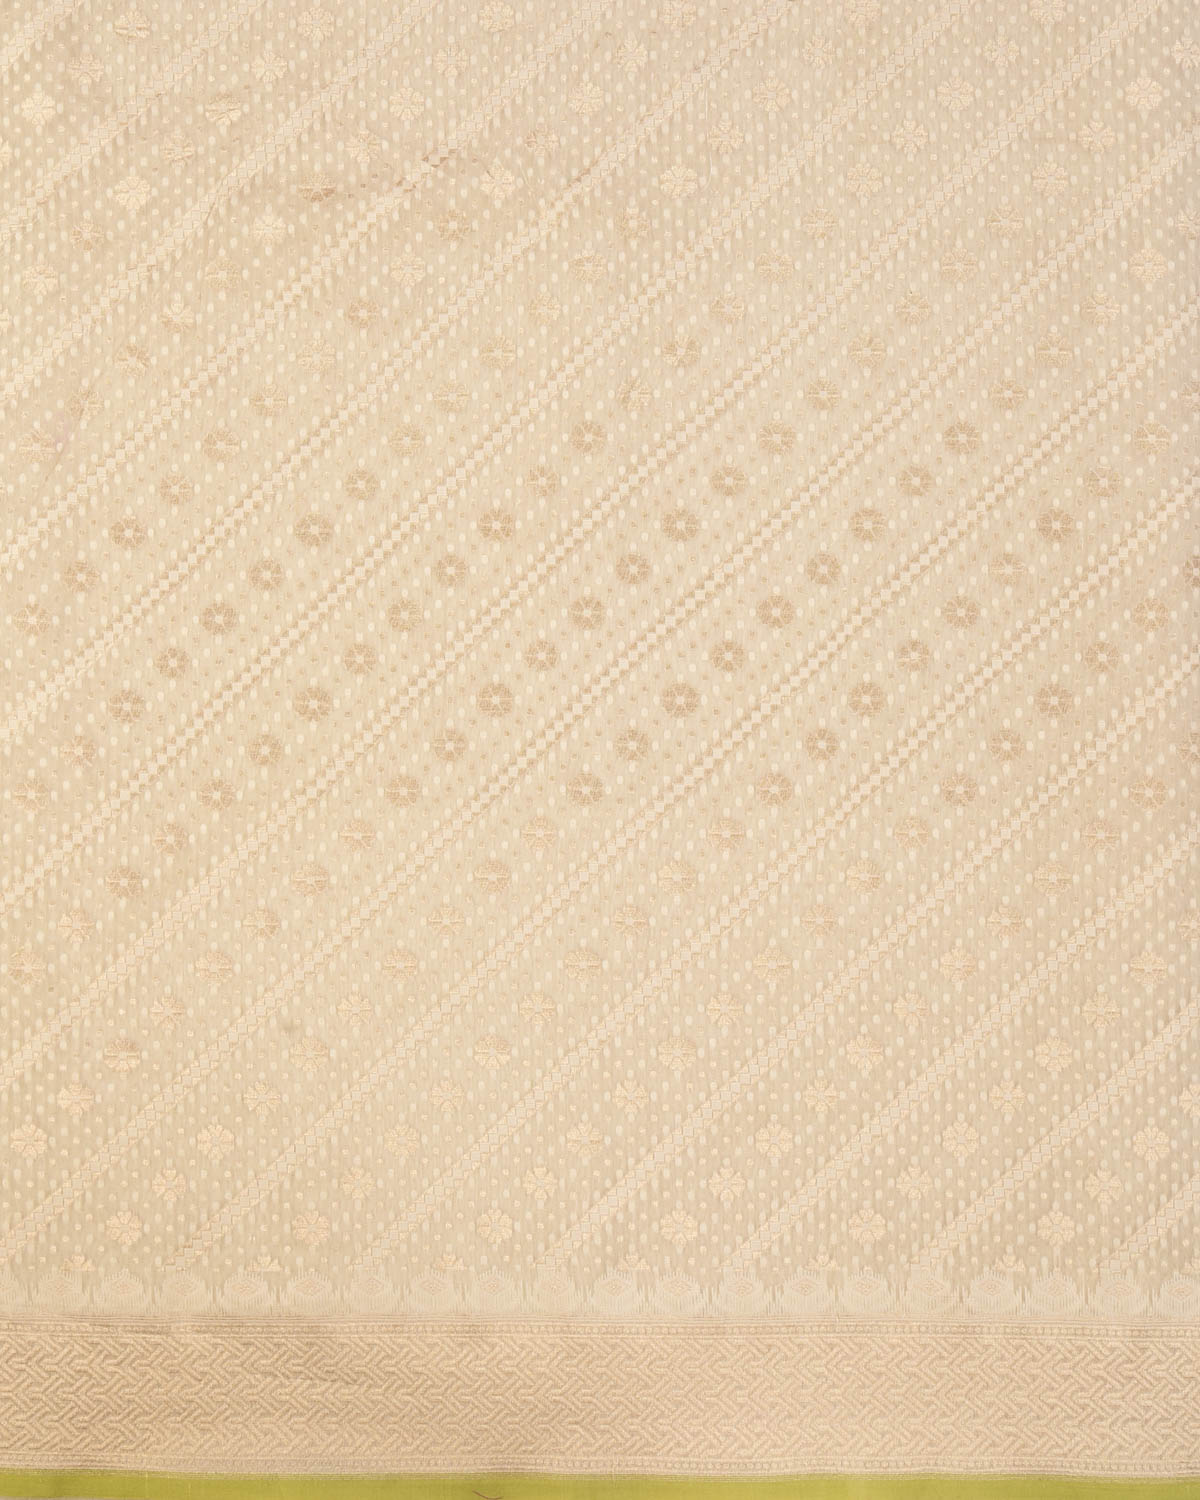 Cream Banarasi Gold Zari & White Resham Alfi Diagonal Buti Cutwork Brocade Handwoven Cotton Silk Saree - By HolyWeaves, Benares